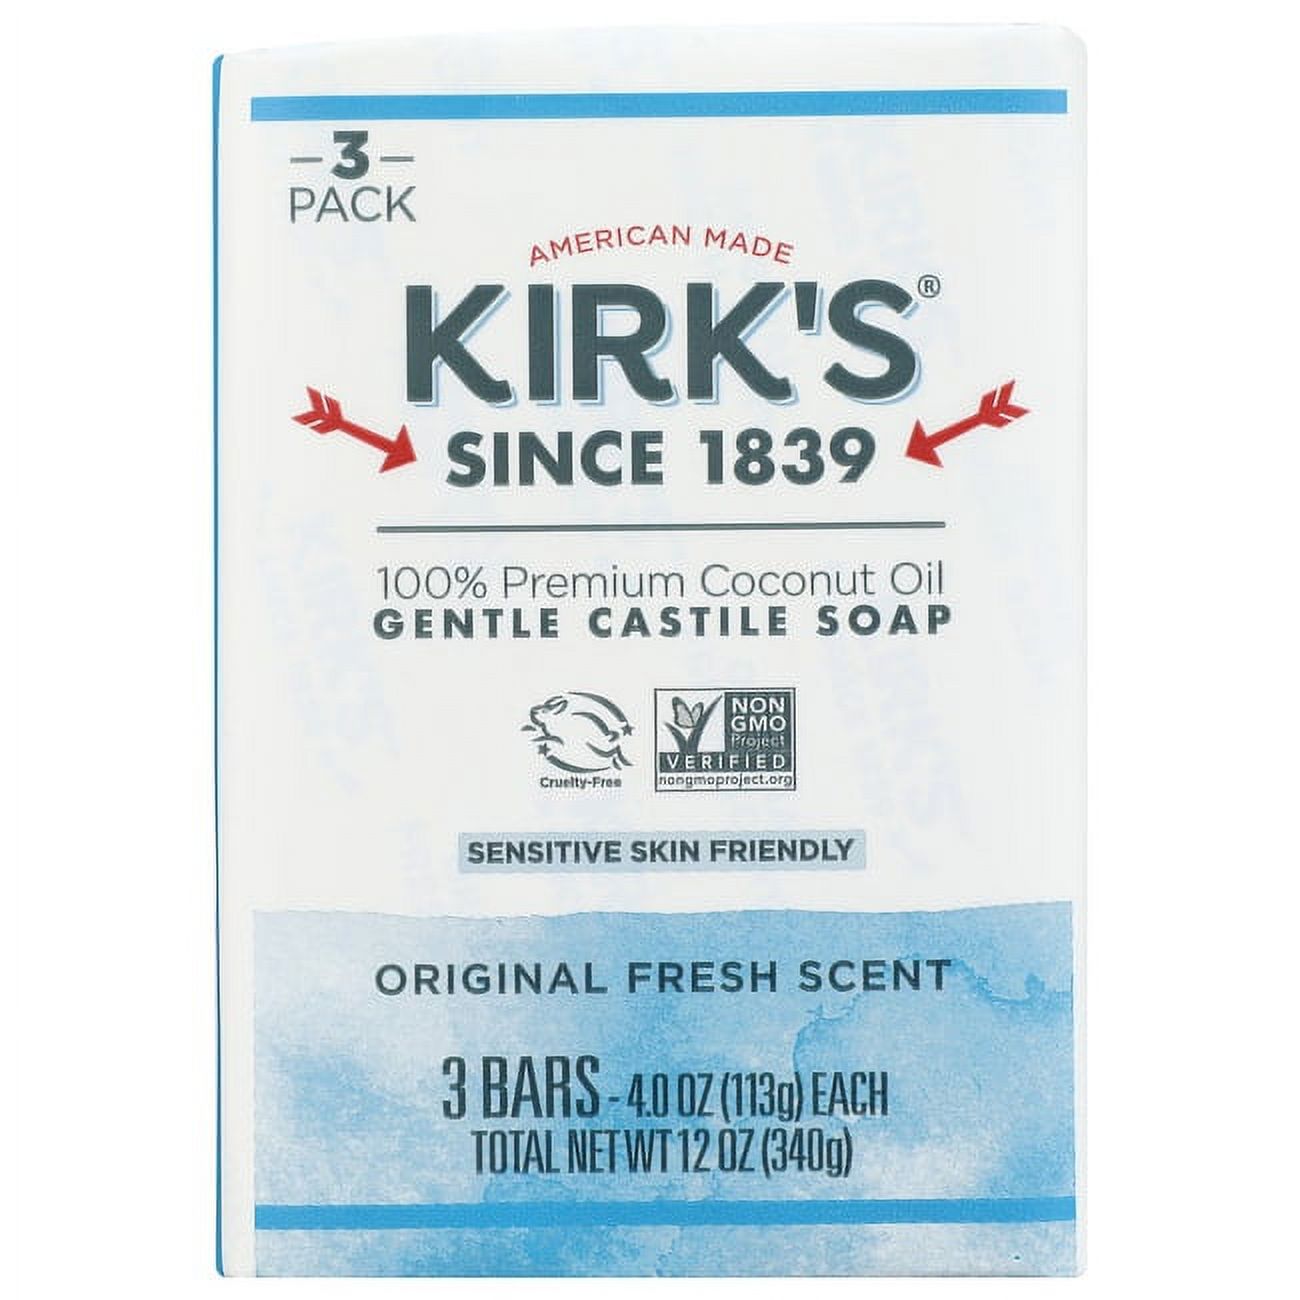 Kirk's Gentle Castile Soap, Original Fresh Scent, 3 Bars, 4 oz - image 1 of 4